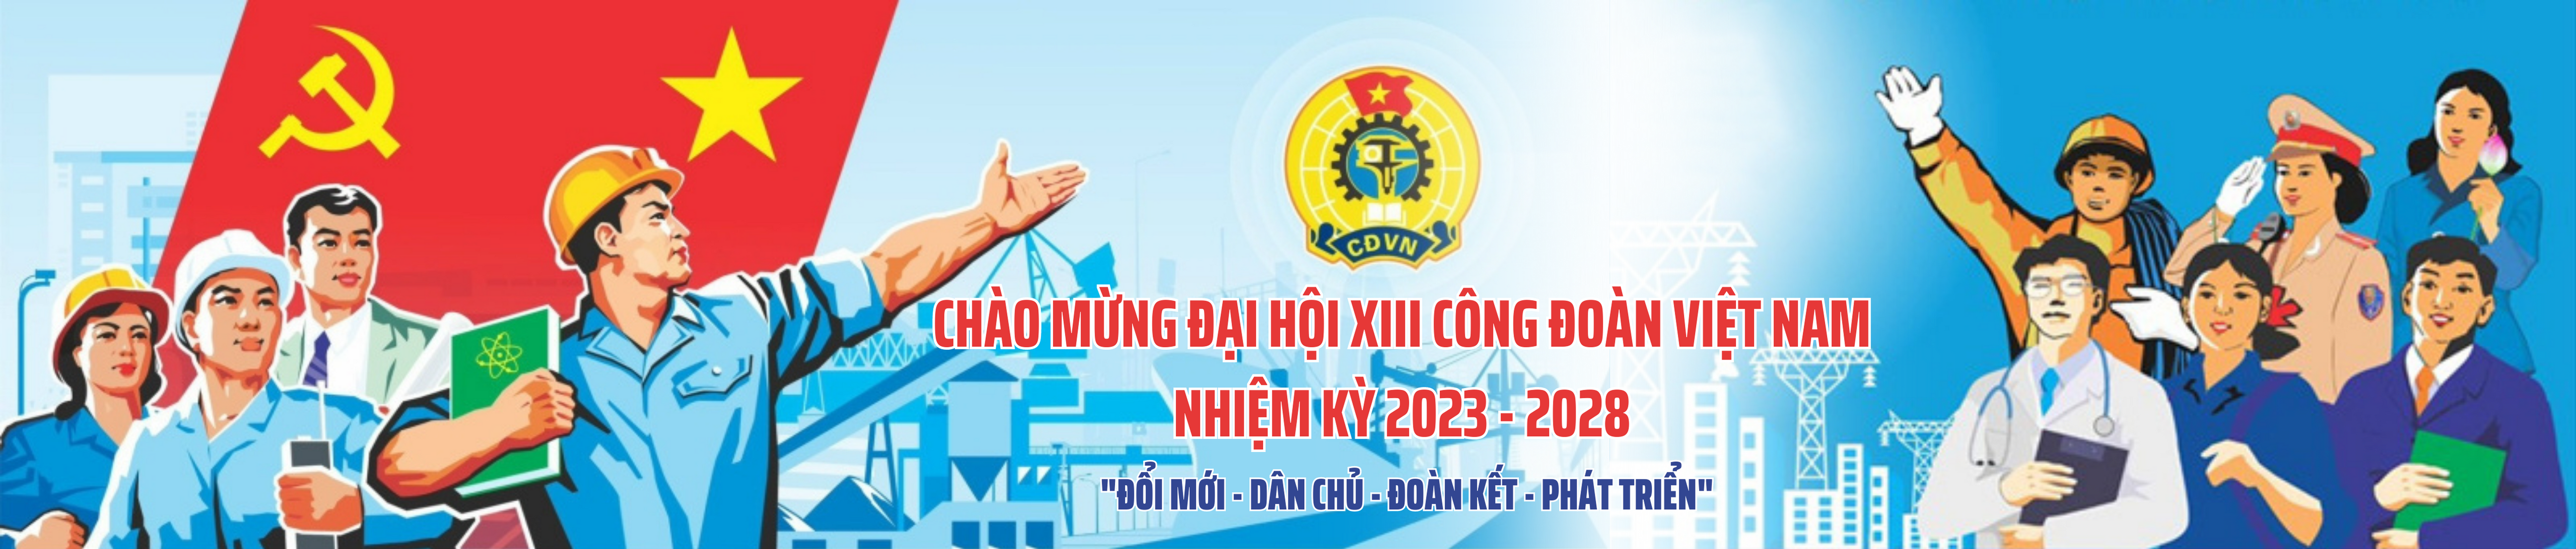 dai-hoi-cong-doan-cac-cap-nhiem-ky-2023-2028